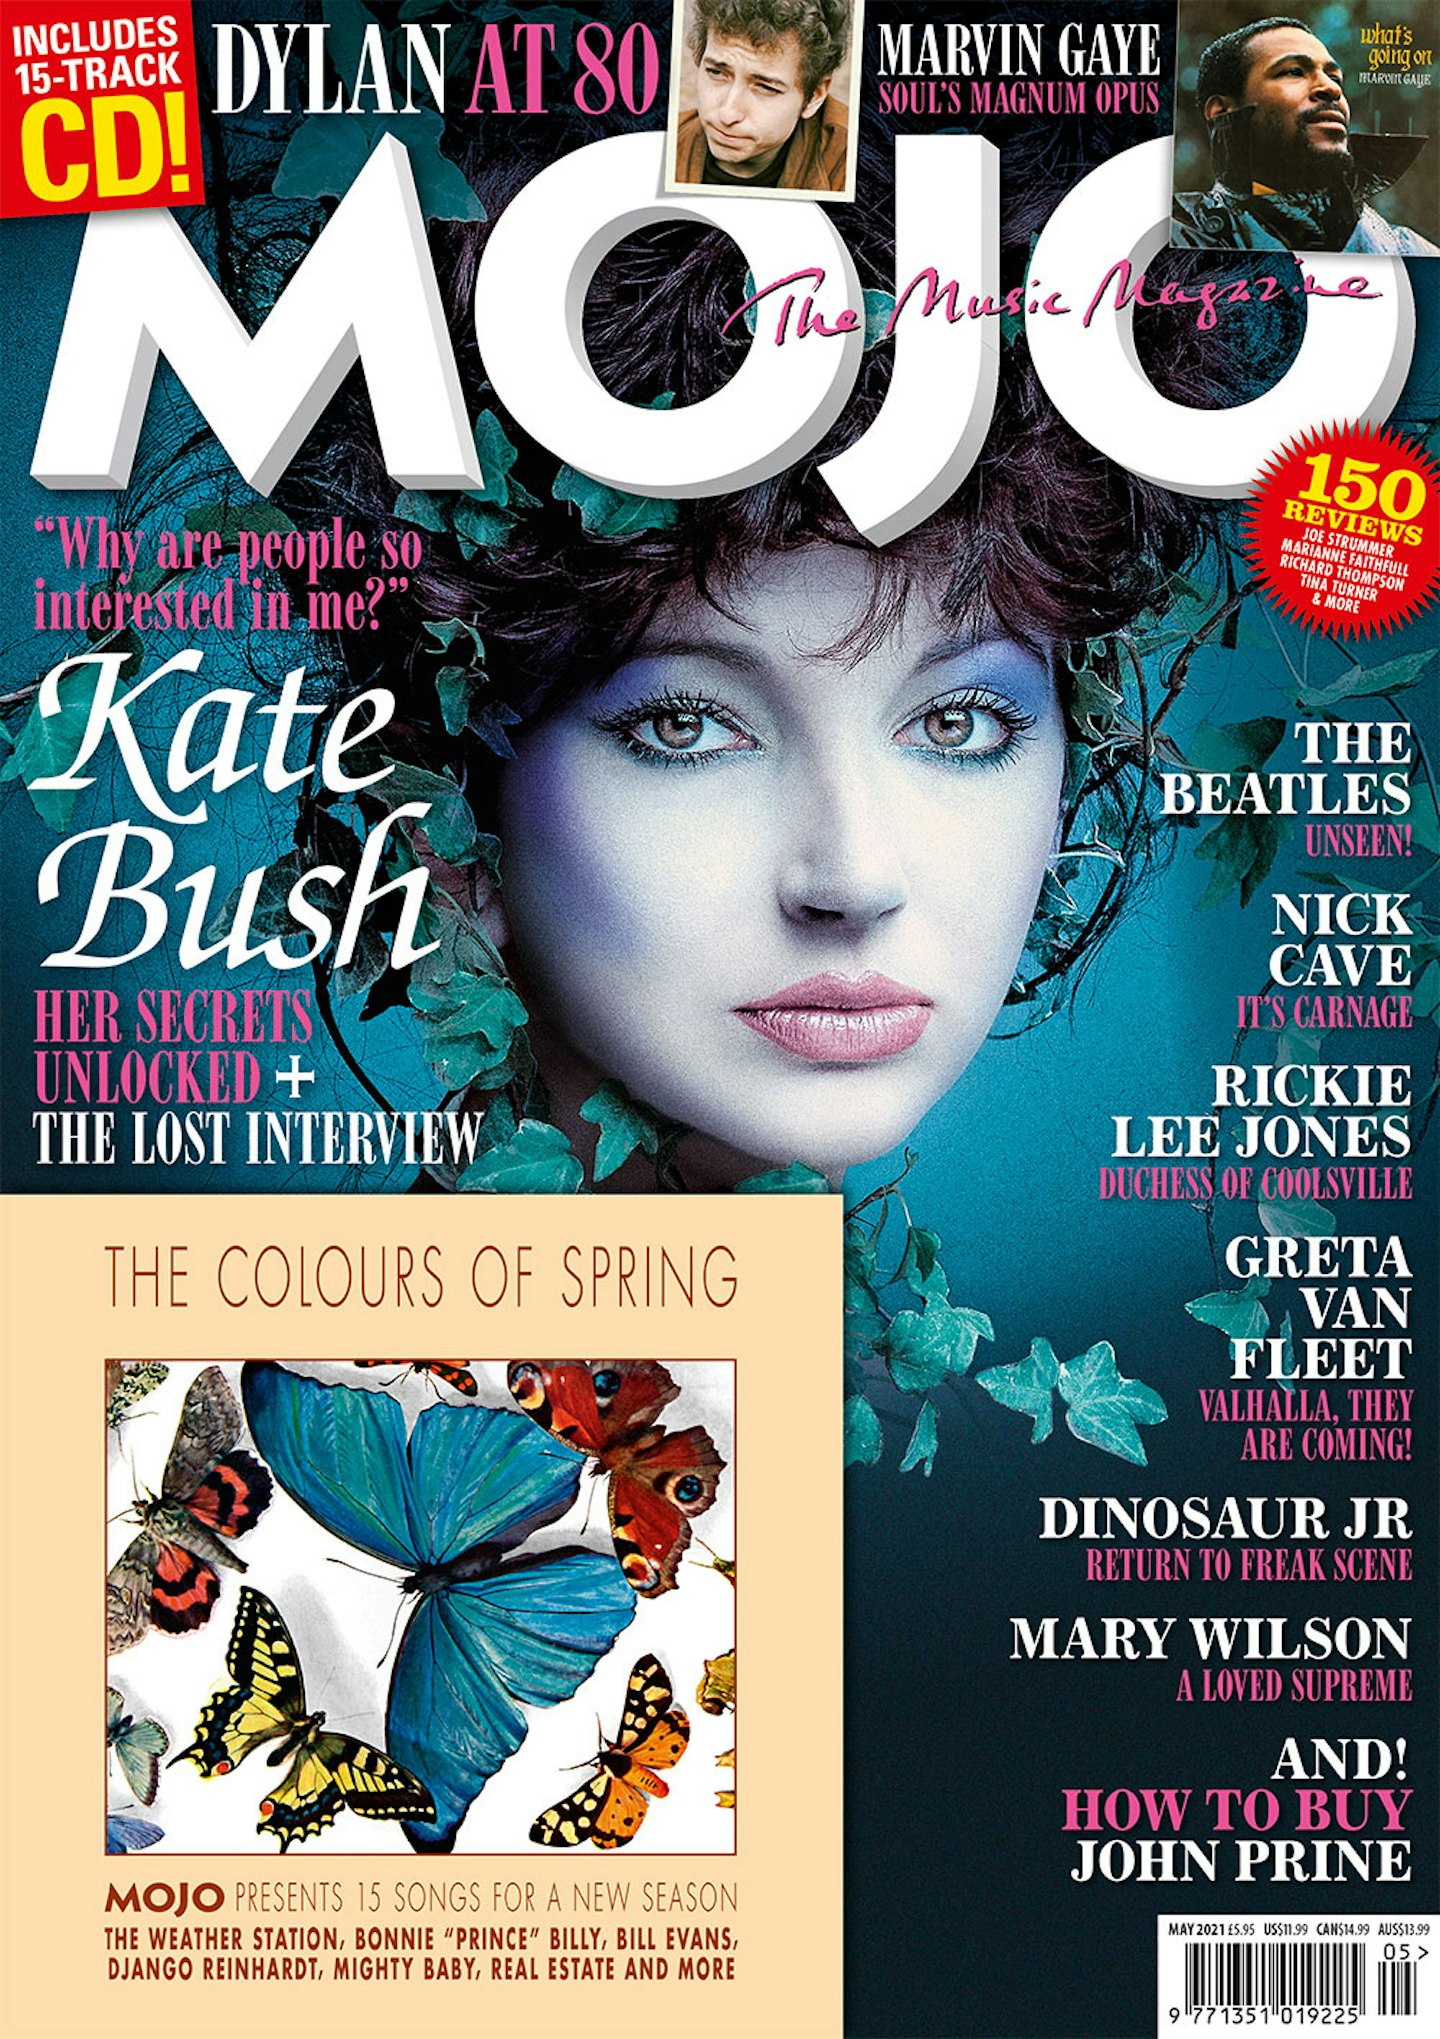 MOJO 330 cover featuring Kate Bush